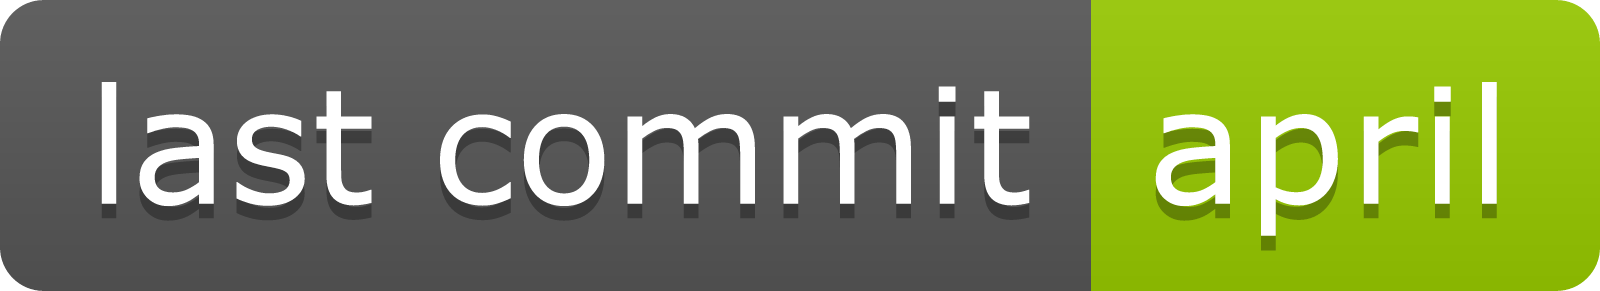 github/last-commit